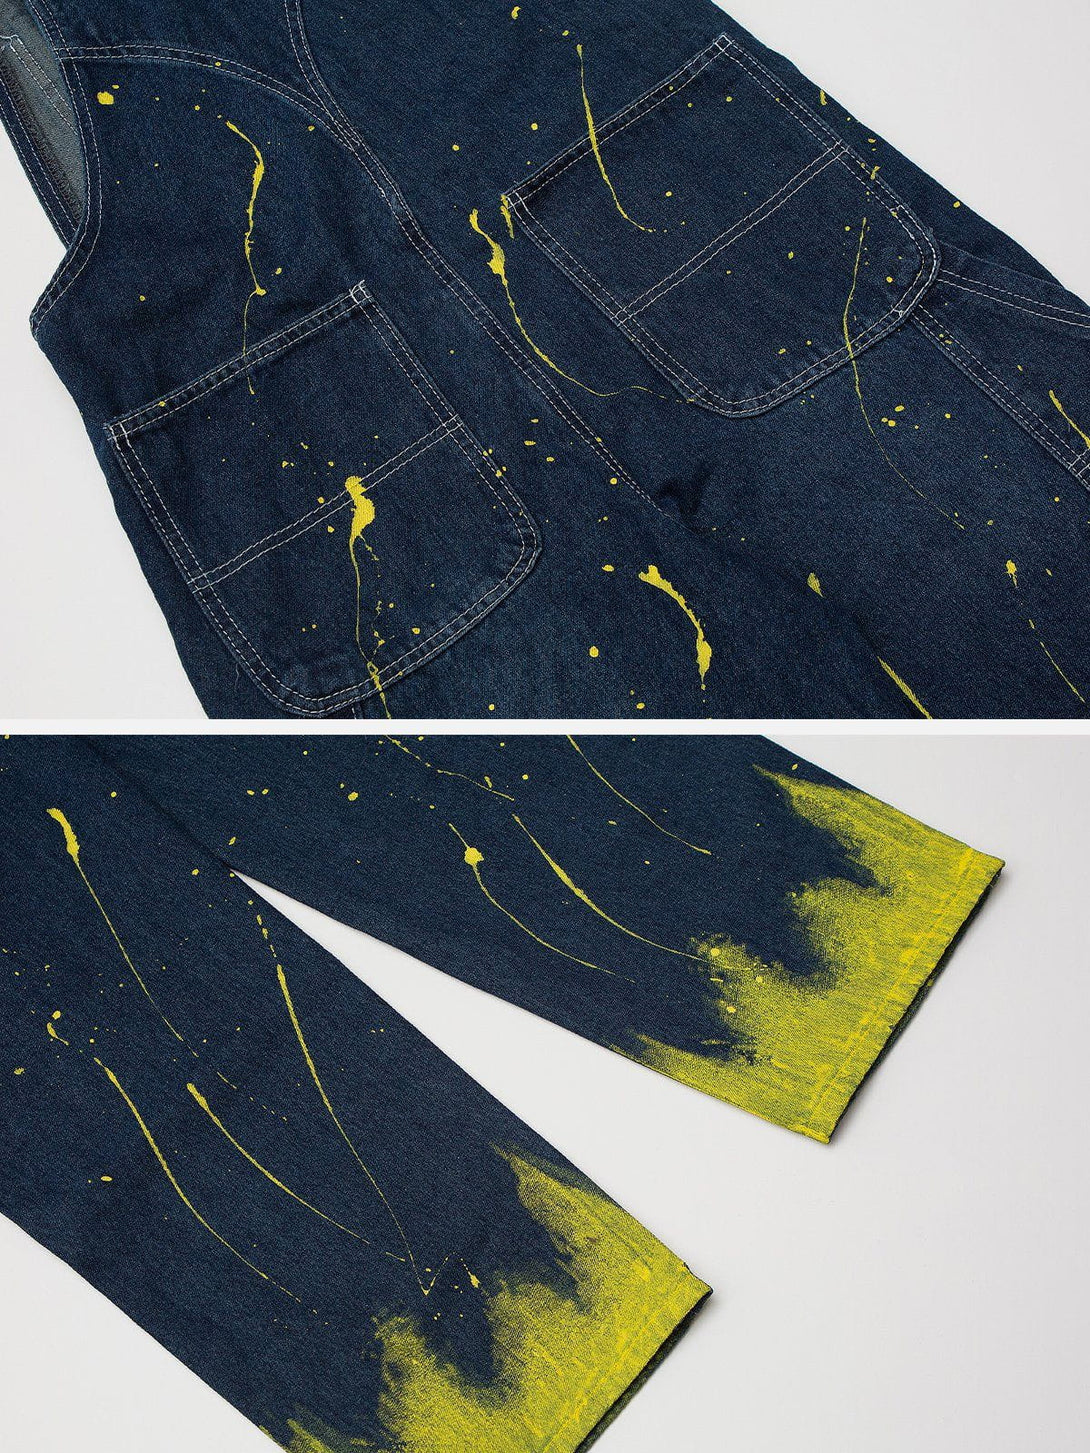 Majesda® - Vintage Loose Splash Ink Suspender Jeans outfit ideas streetwear fashion